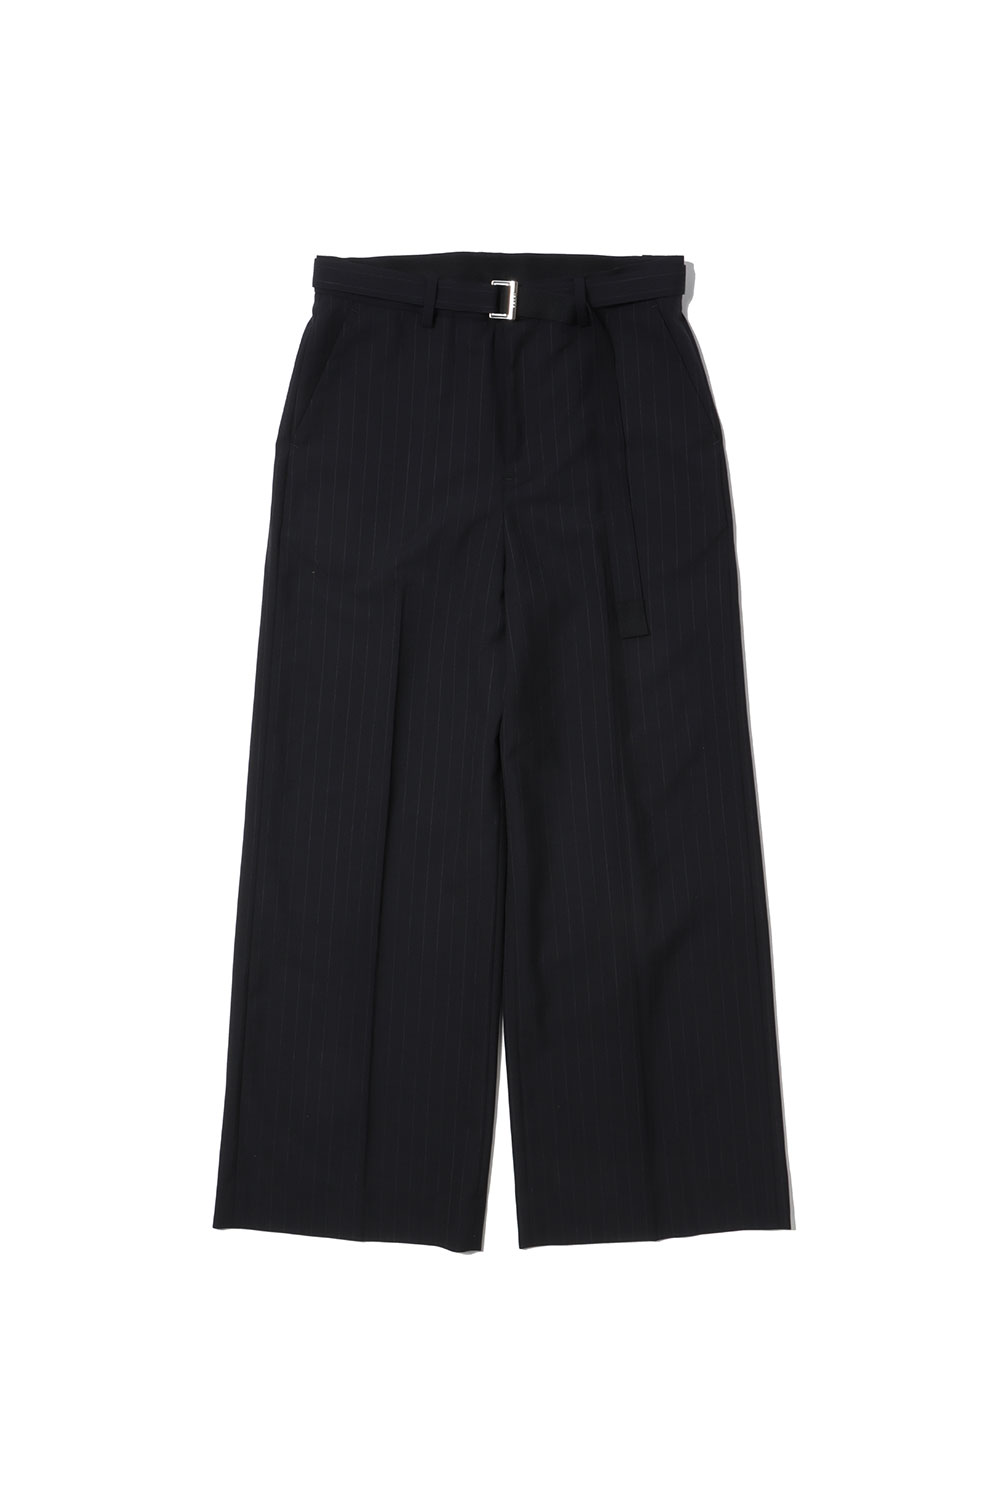 Sacai Chalk Stripe Shorts 24SS新品未使用 人気新品 - パンツ